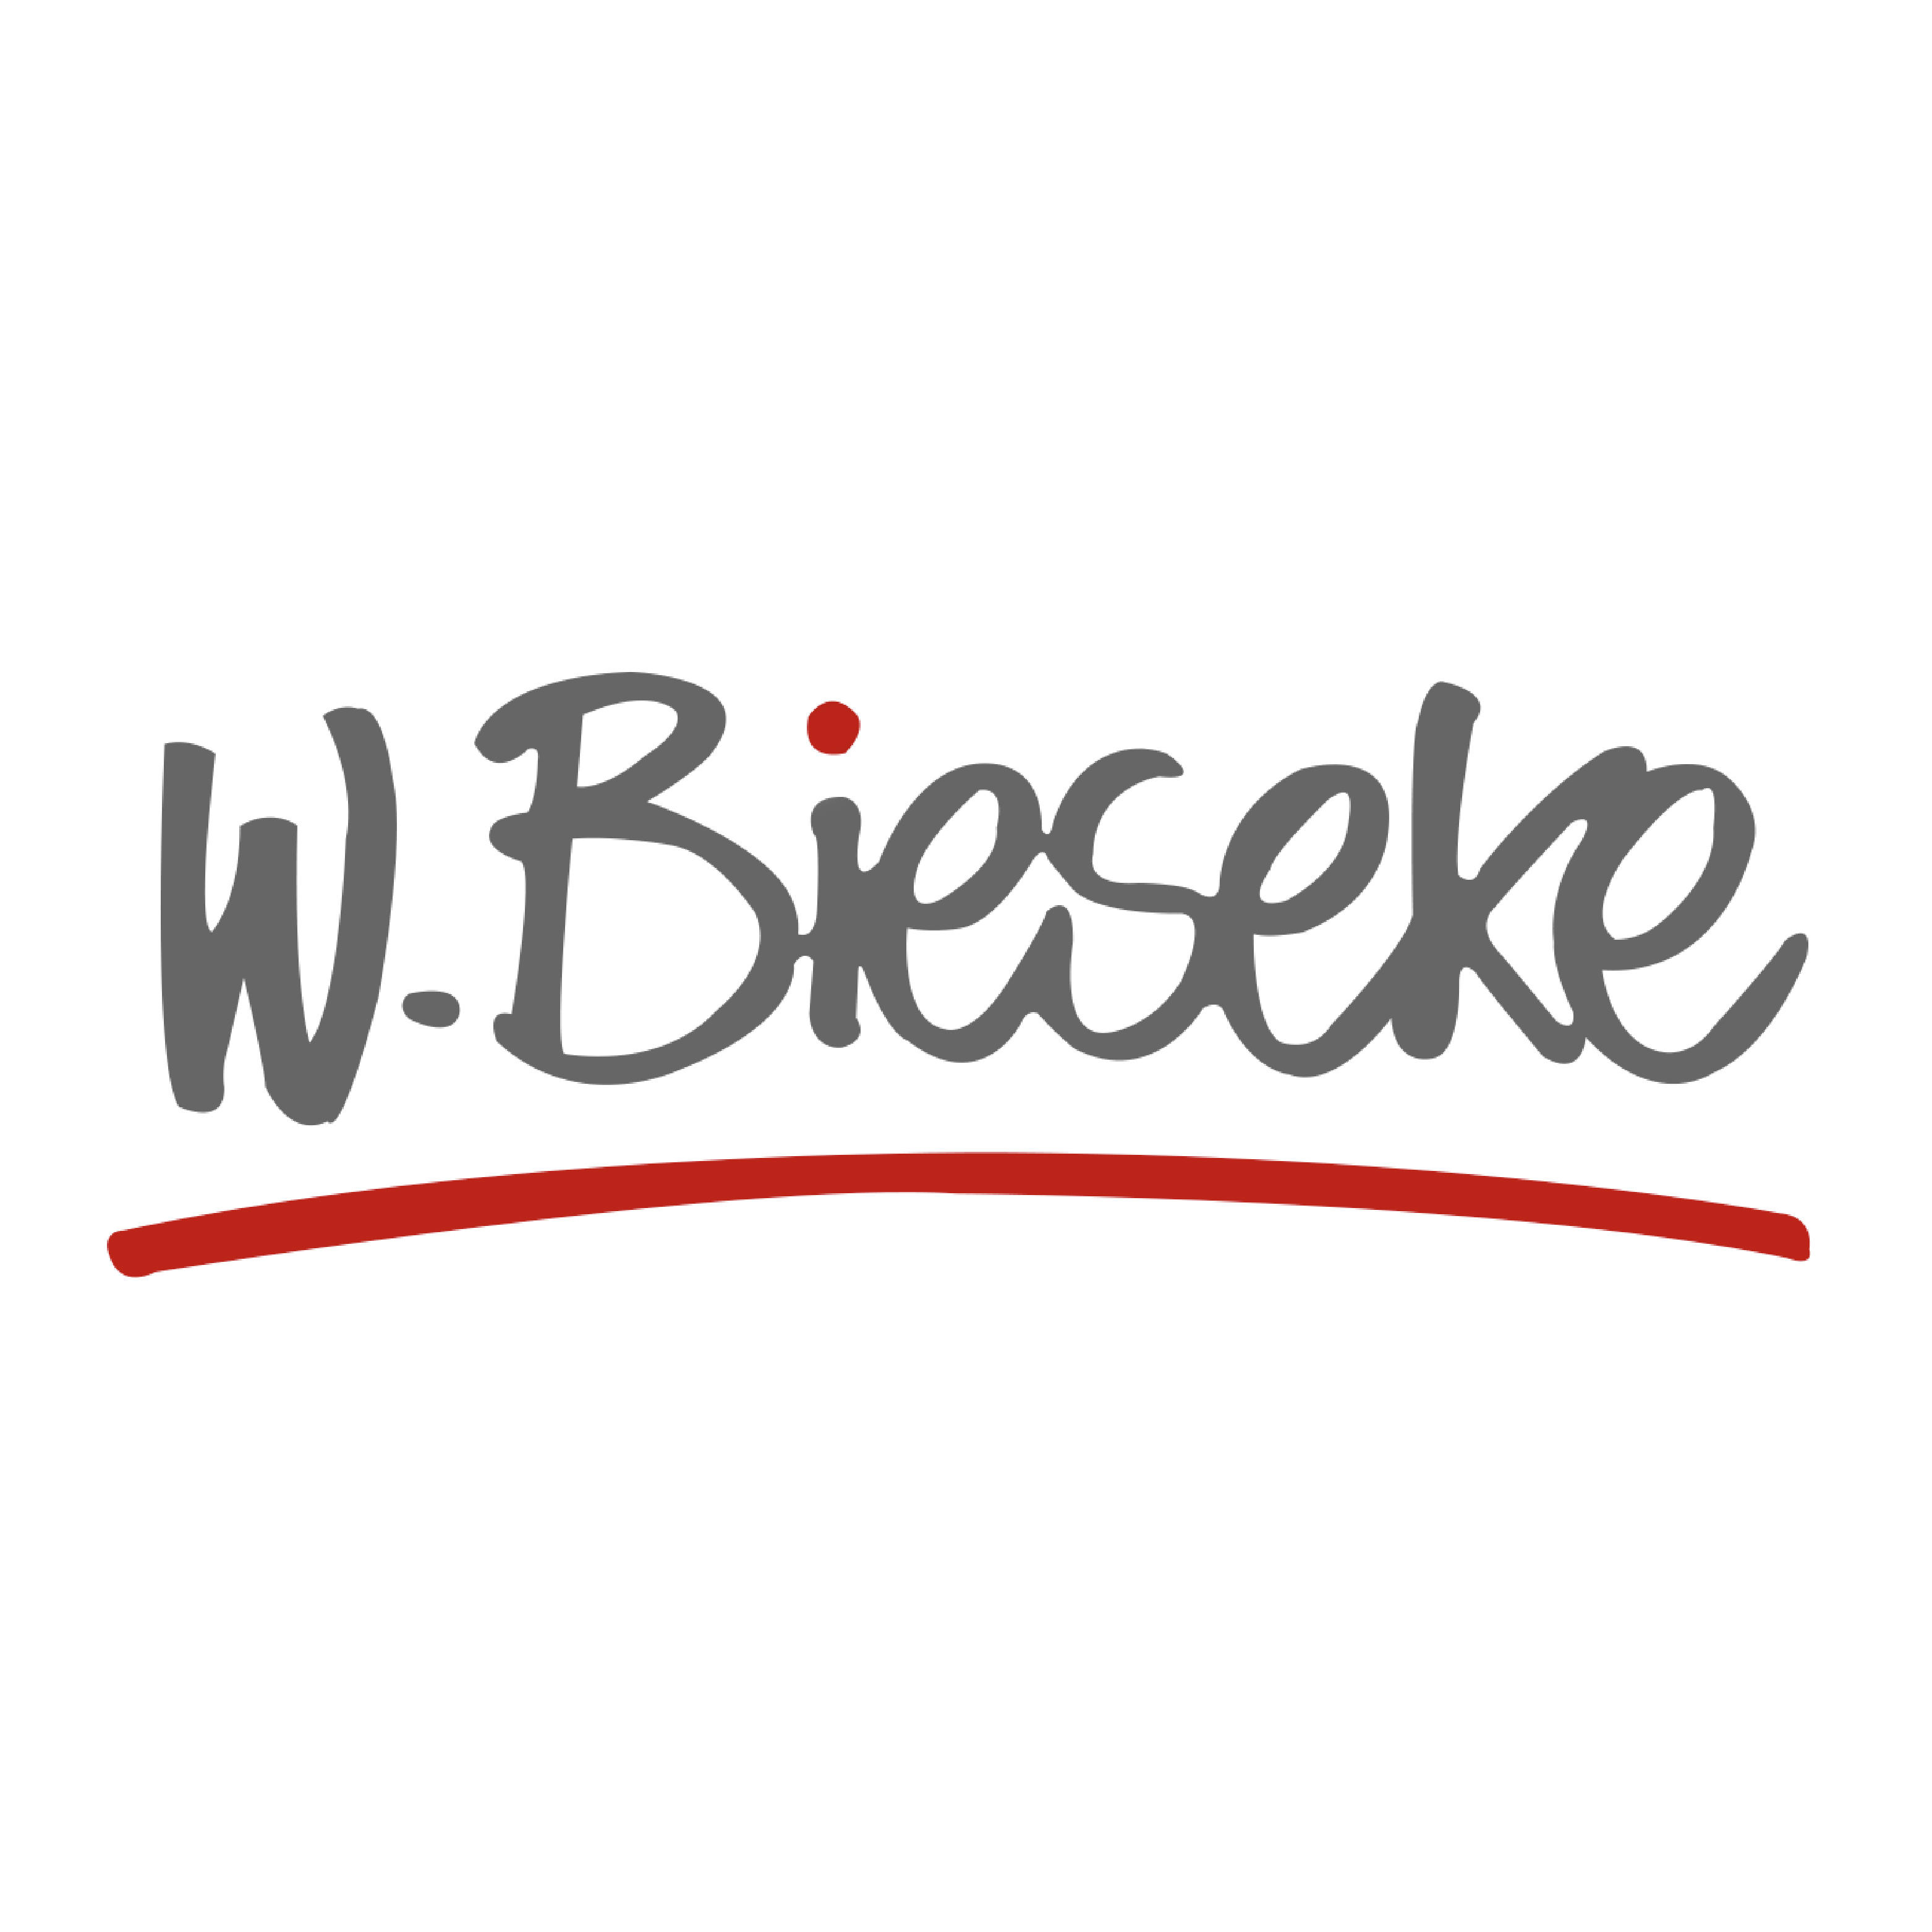 Waldemar Bieseke Logo